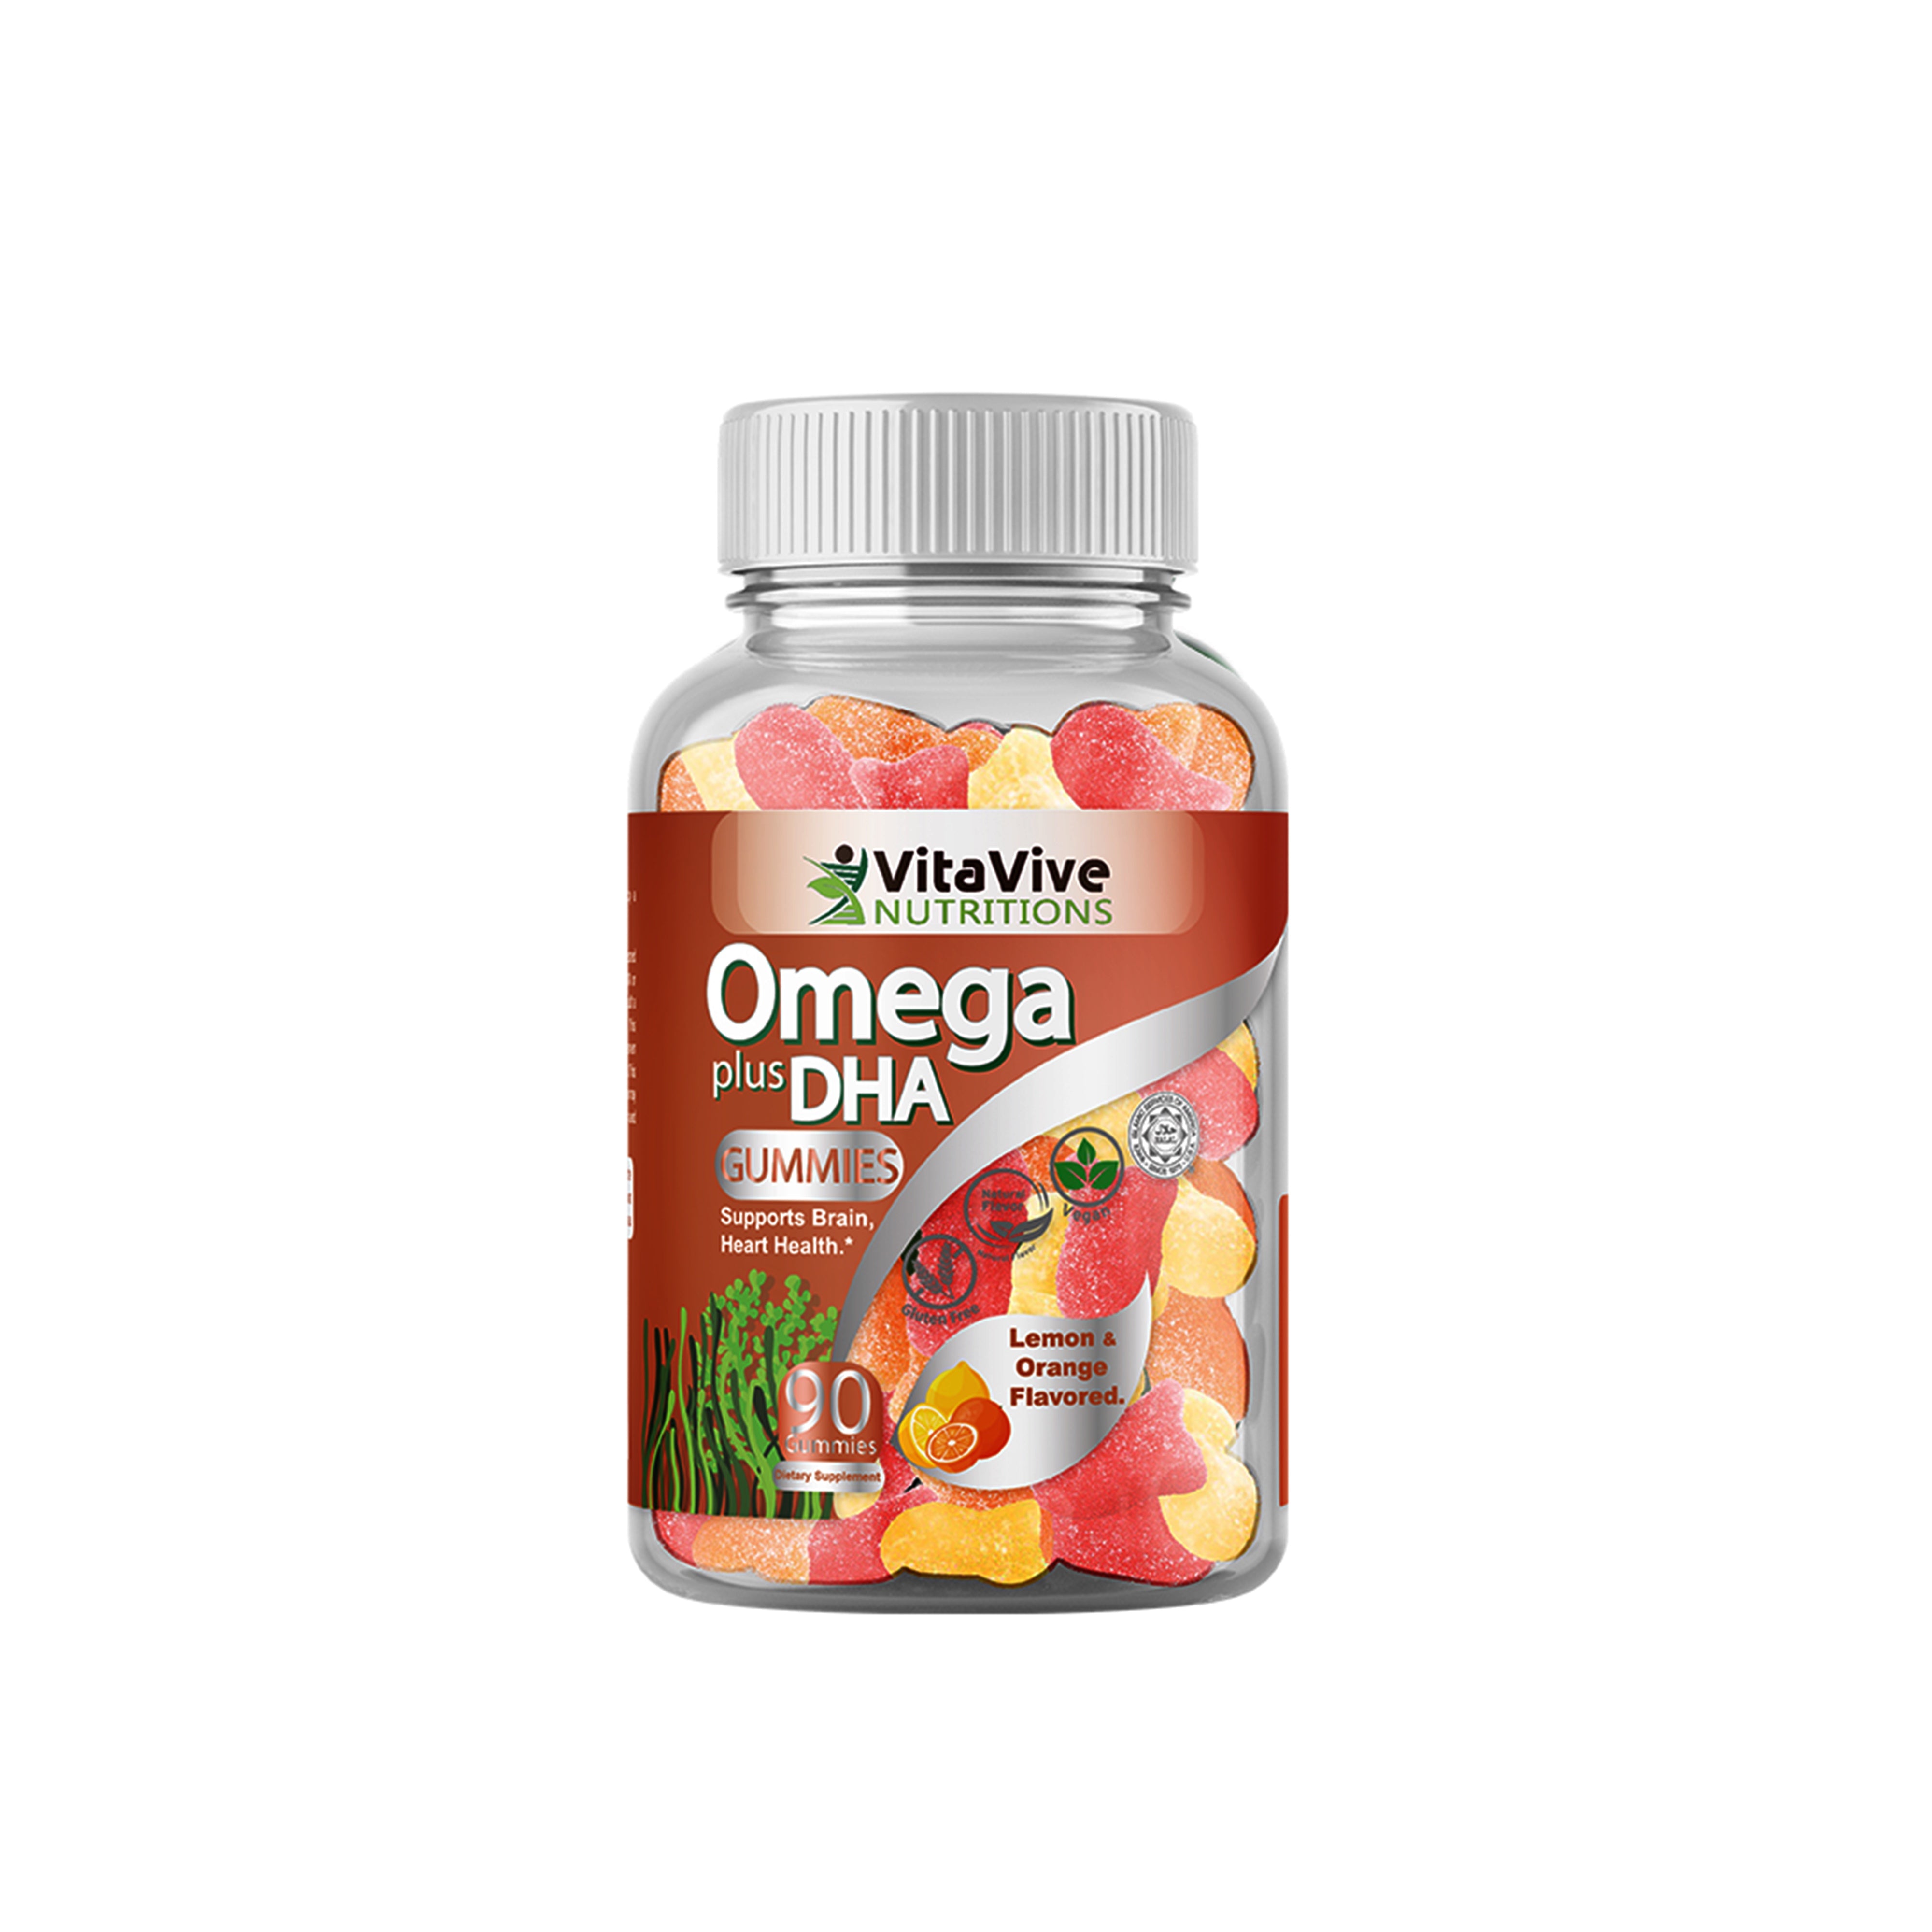 Omega plus DHA Gummies